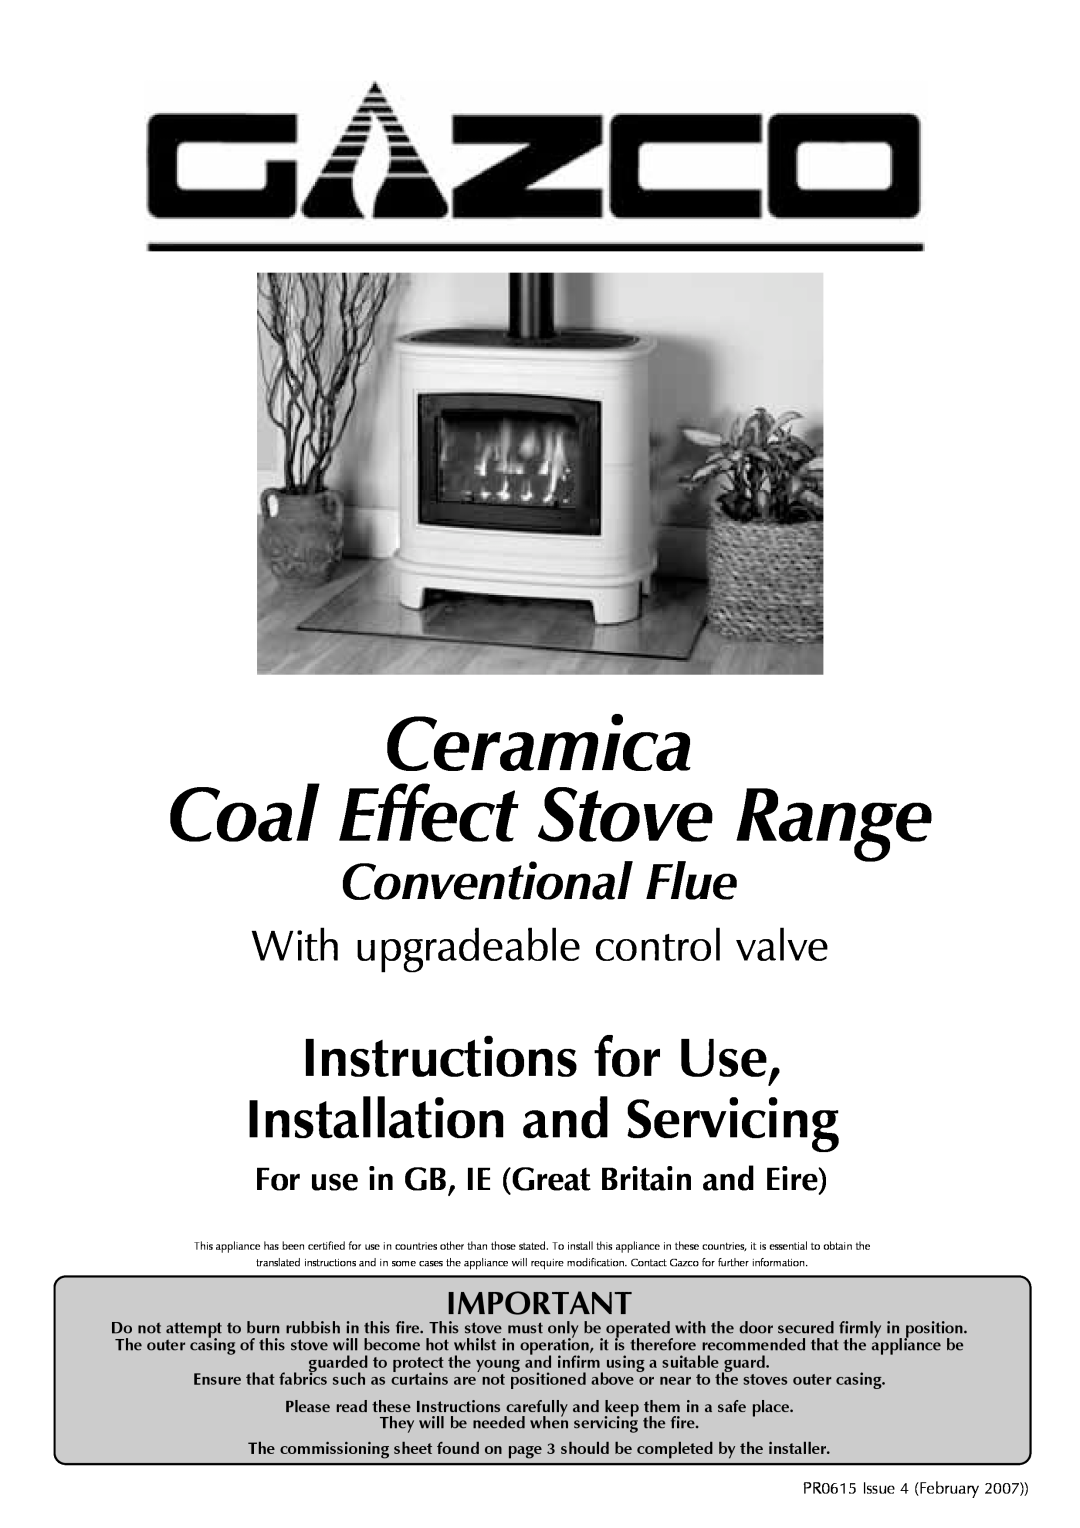 Stovax Coal Effect Stove Range Conventional Flue manual Ceramica Coal Effect Stove Range, With upgradeable control valve 